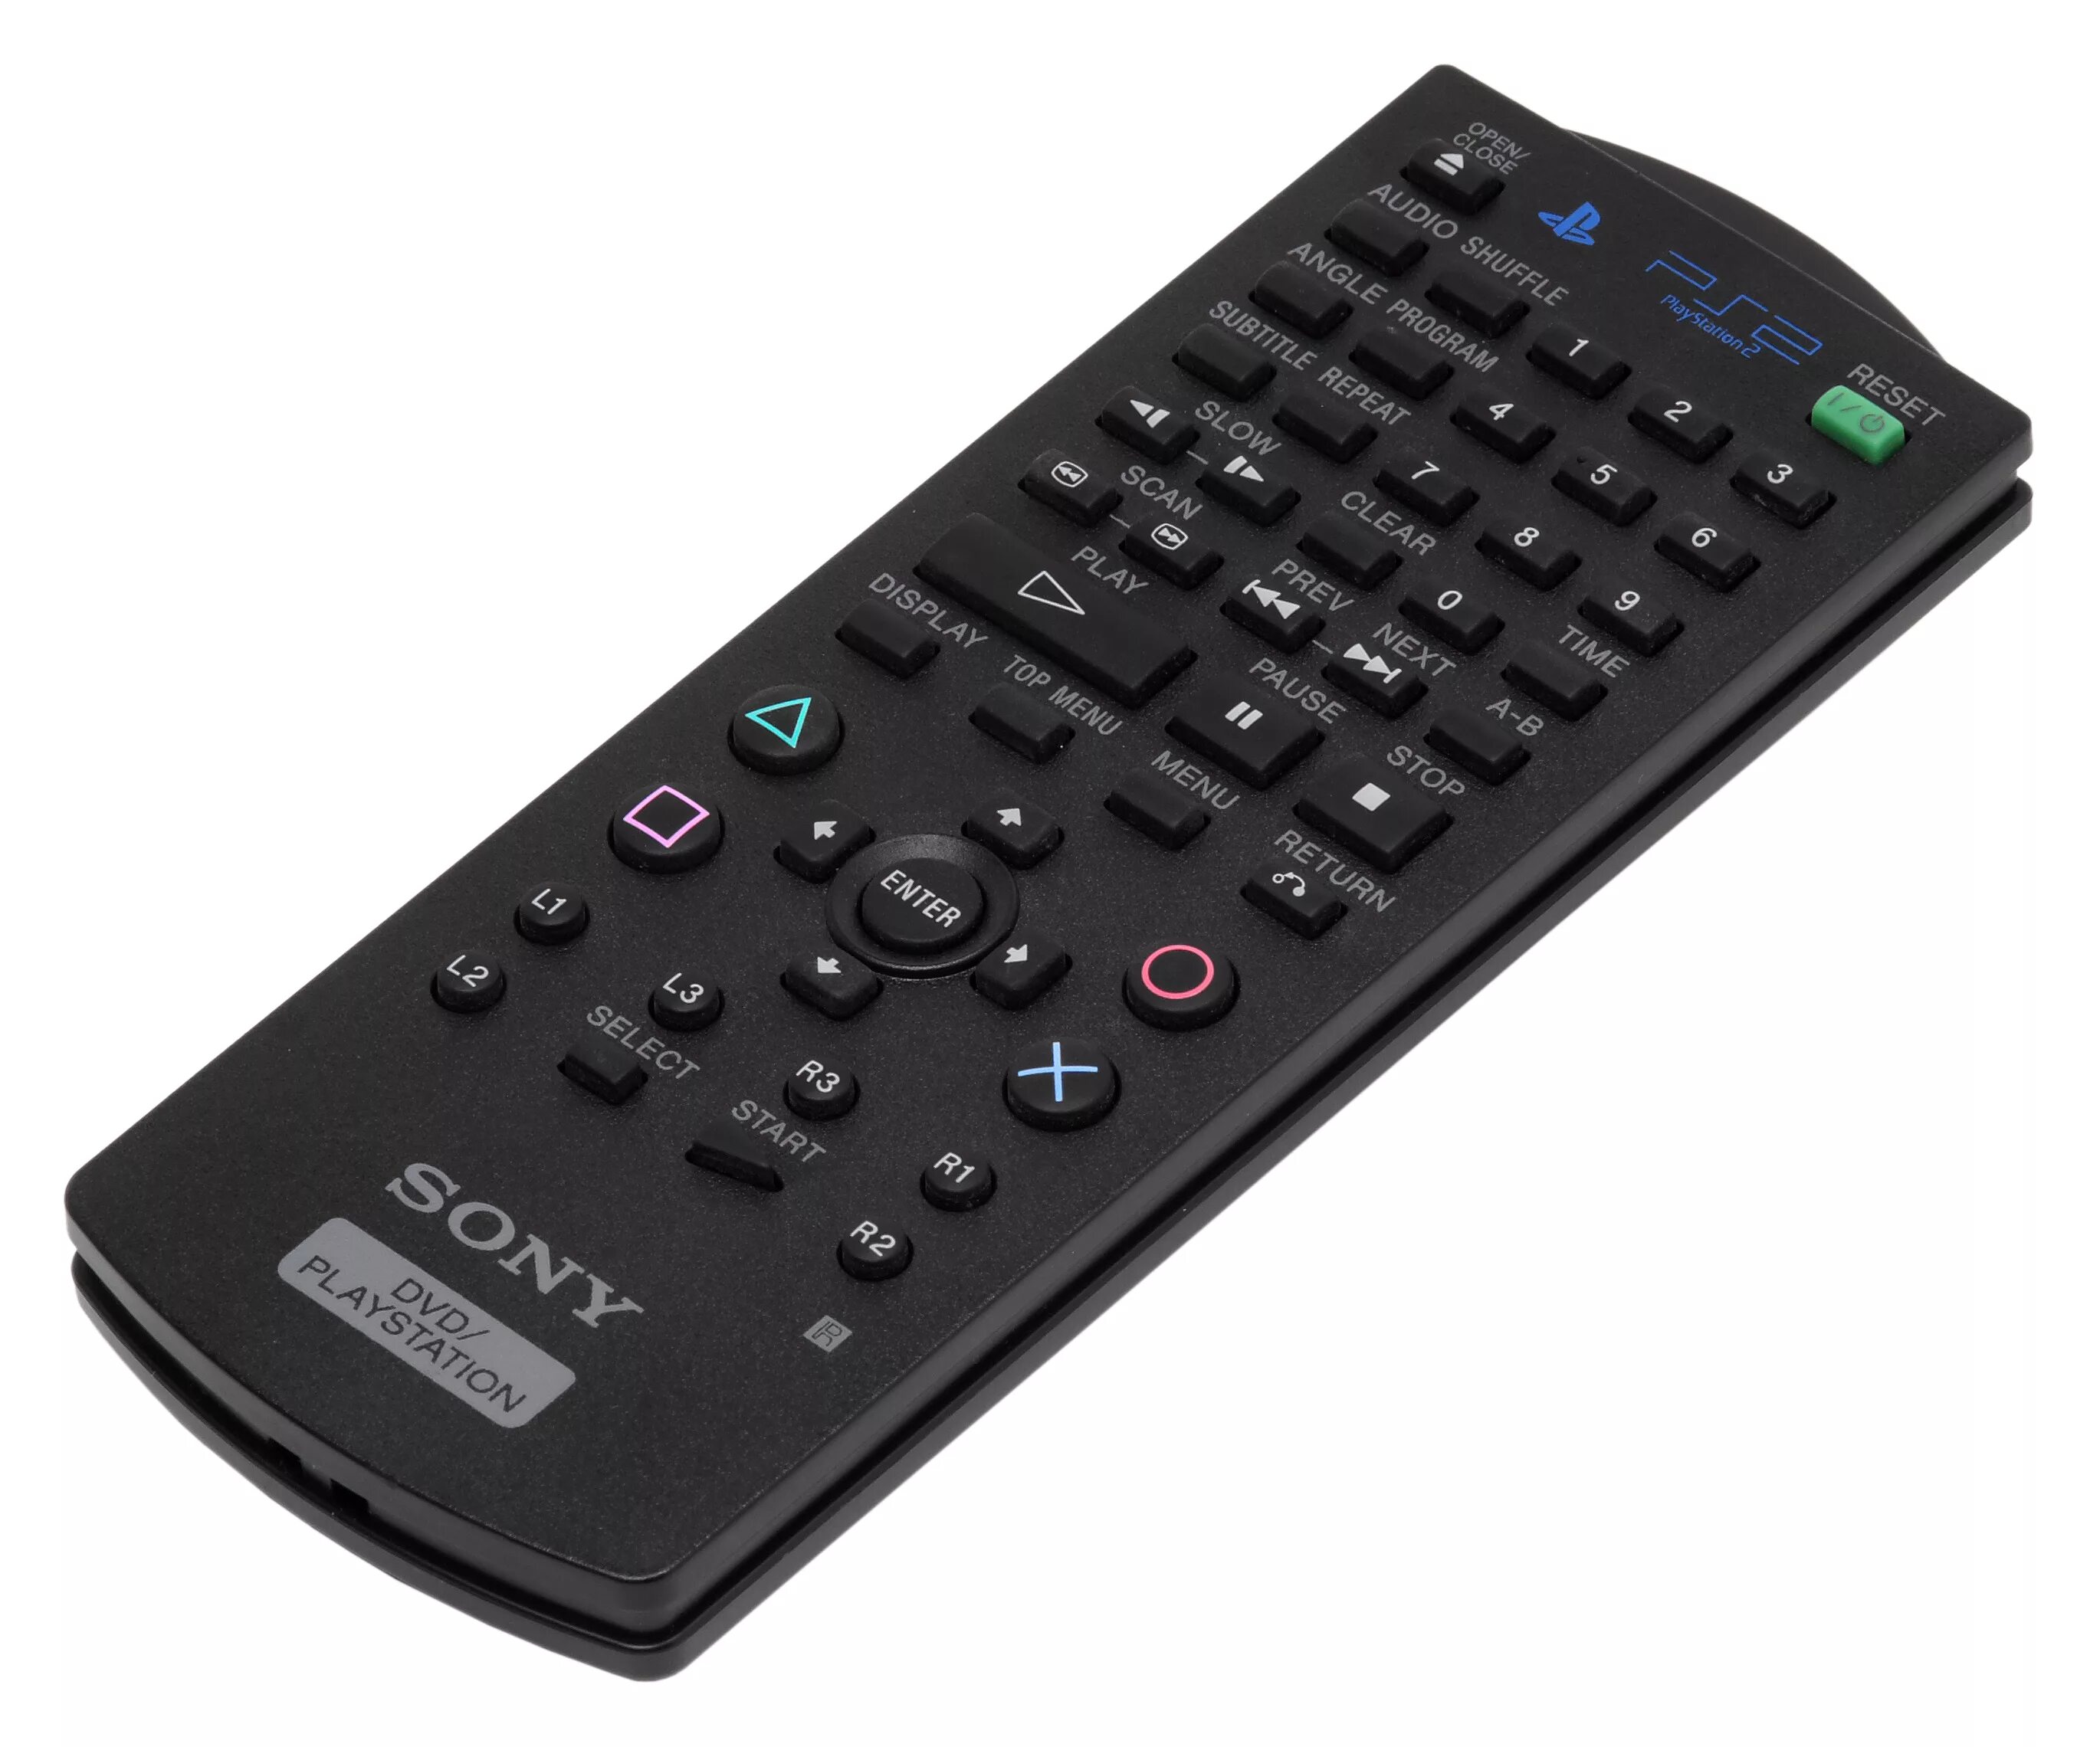 Remote control 2. Пульт к Sony ps2. Пульт DVD Remote Control. DVD Remote Control PLAYSTATION 2. Пульт для Sony PLAYSTATION 2.